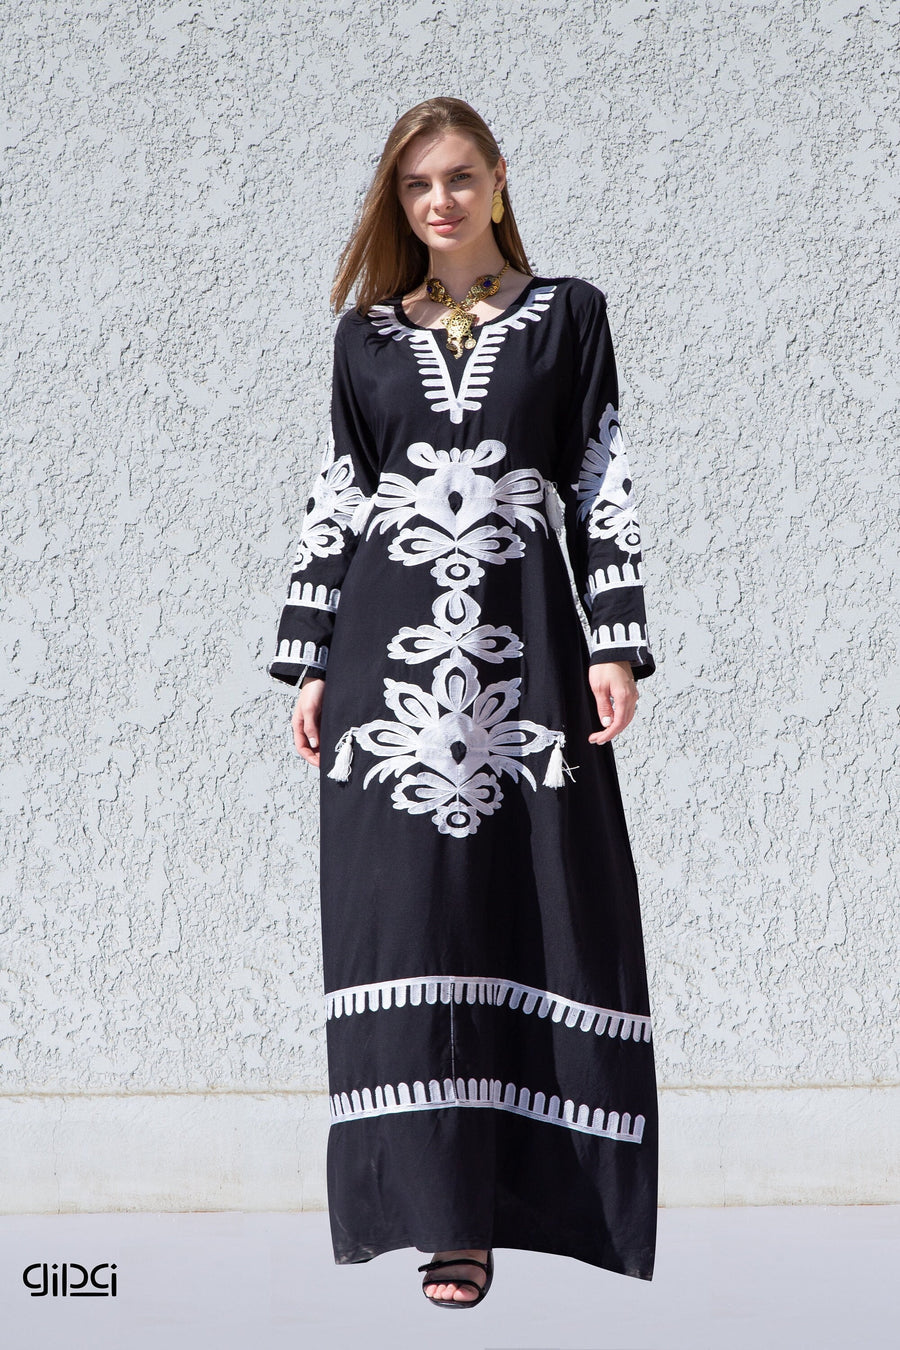 Royal Black embroidered kaftan dress, caftans for women, Boho Kaftan dress, Caftans for women, long summer kaftan, kaftans, caftan